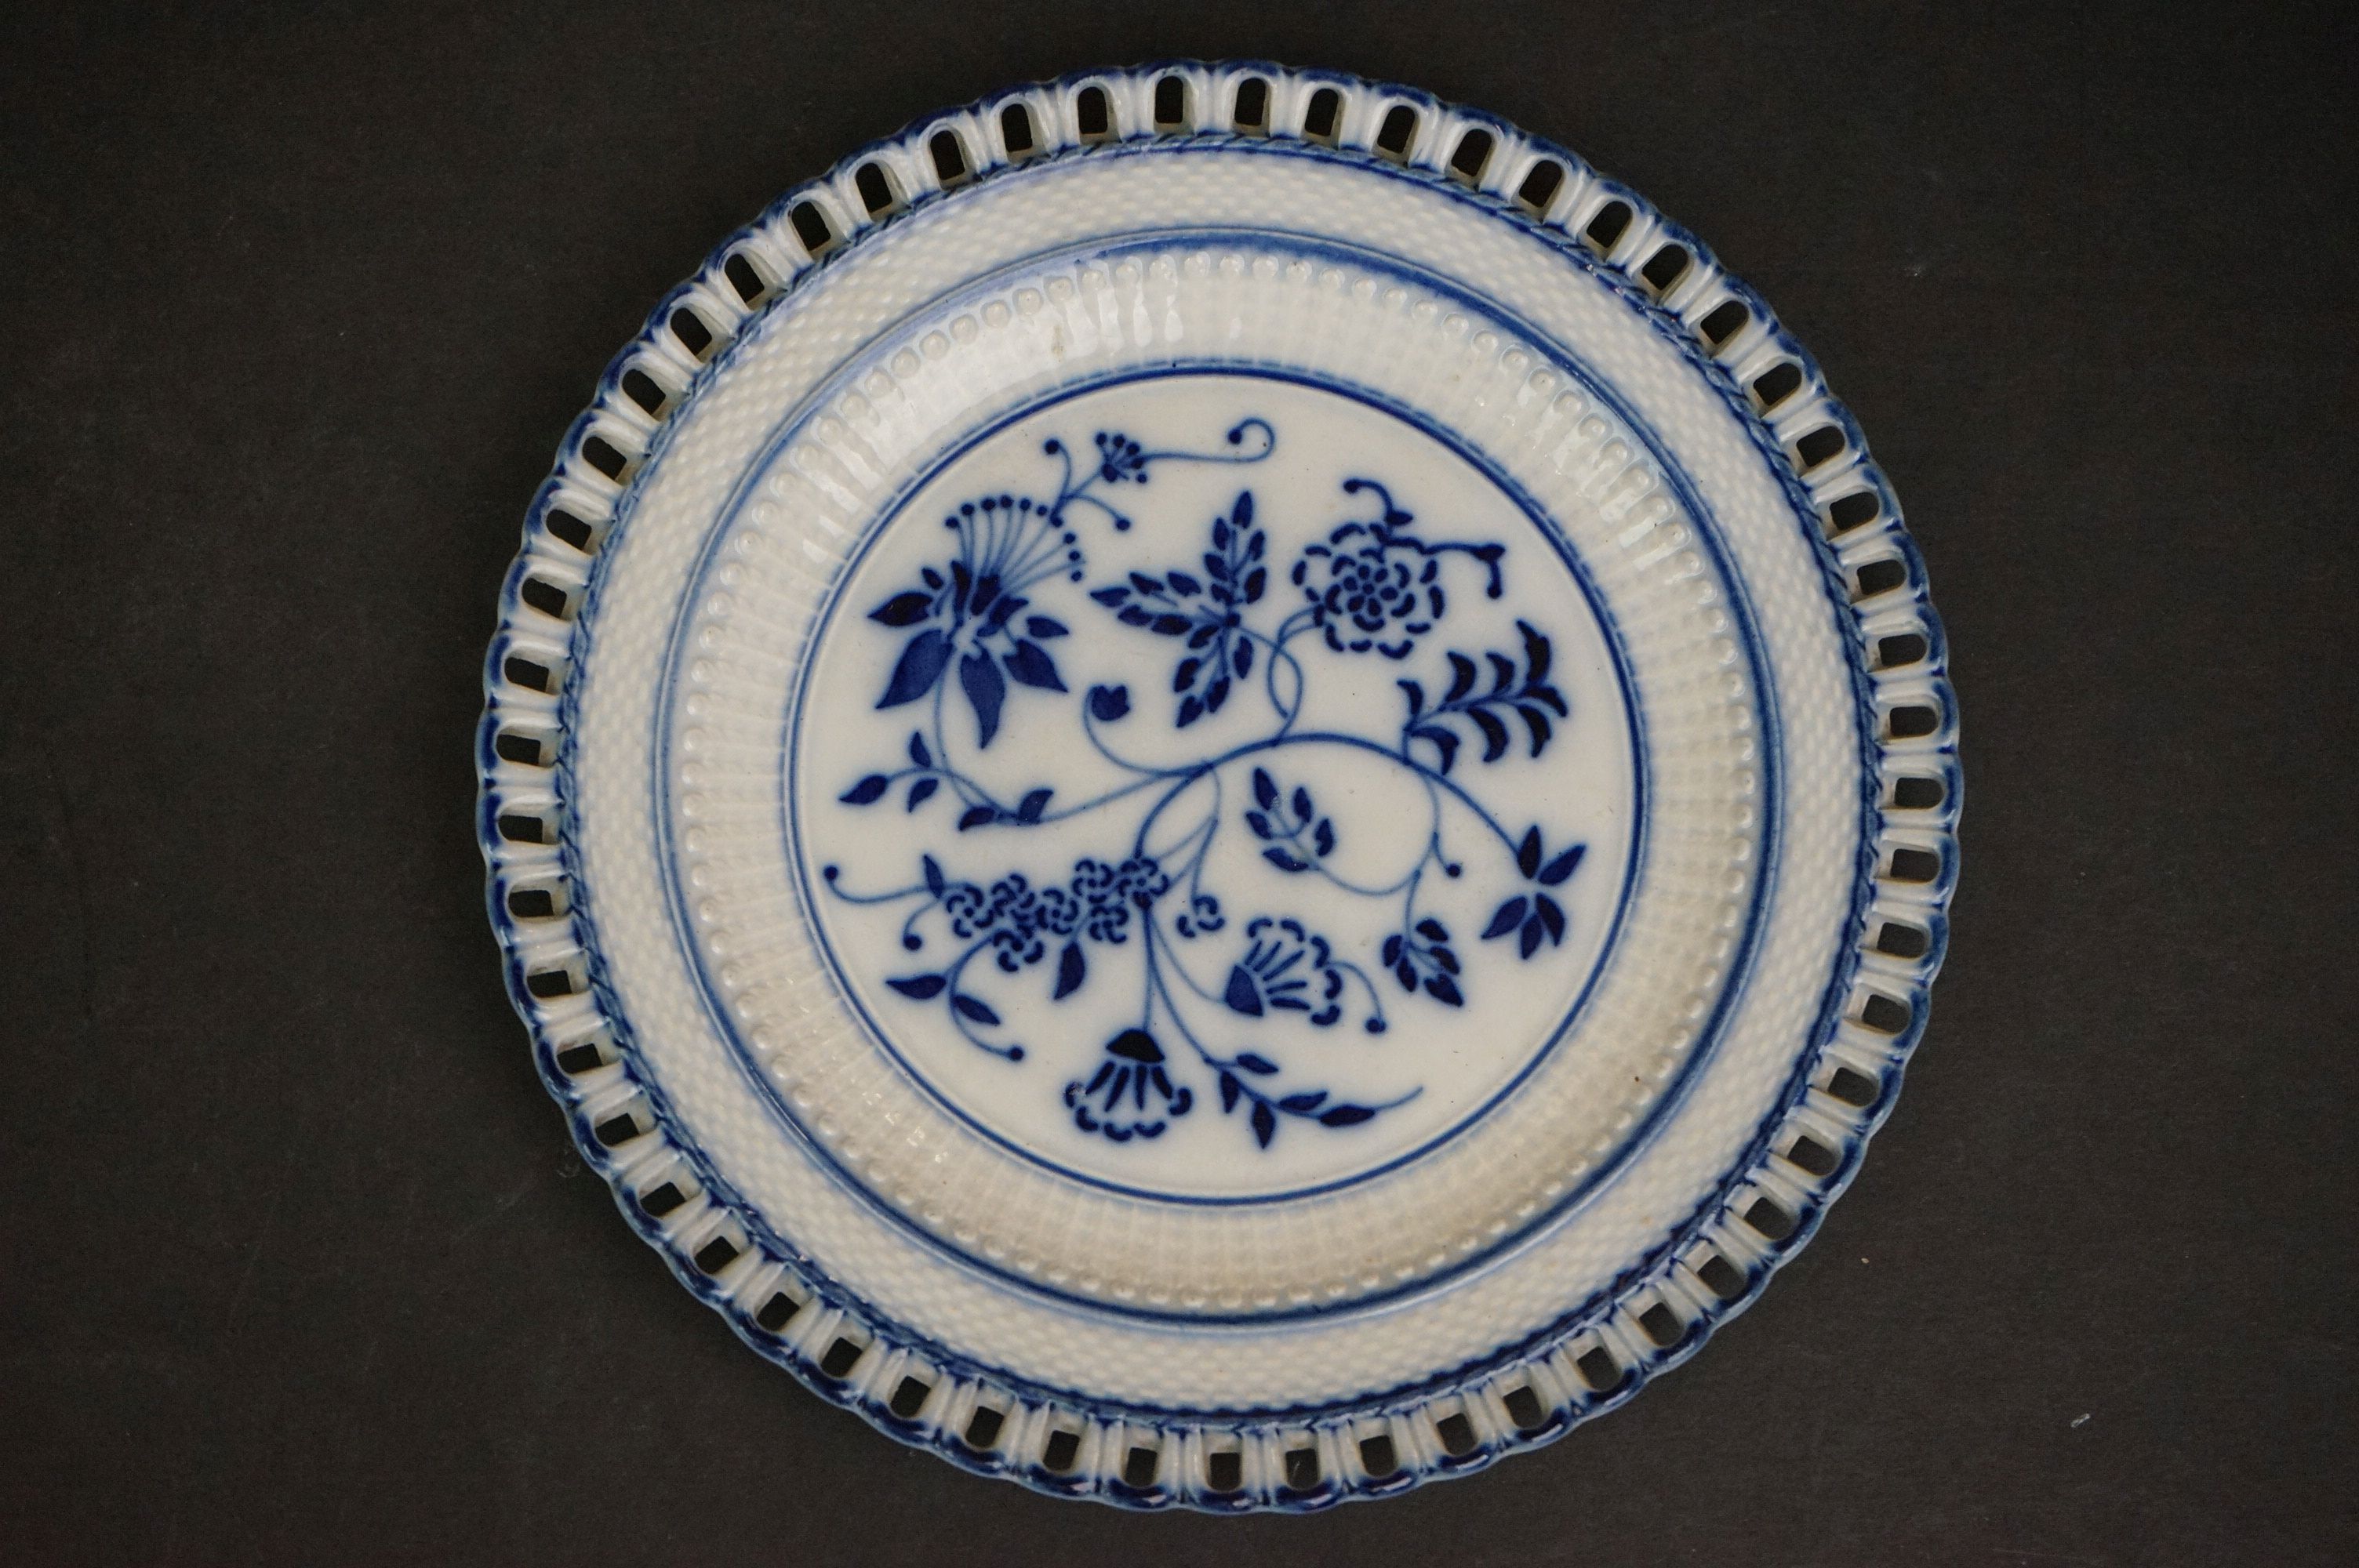 Set of Six Waechtersbach Basketweave Ribbon Plates with blue and white onion style pattern - Image 2 of 4